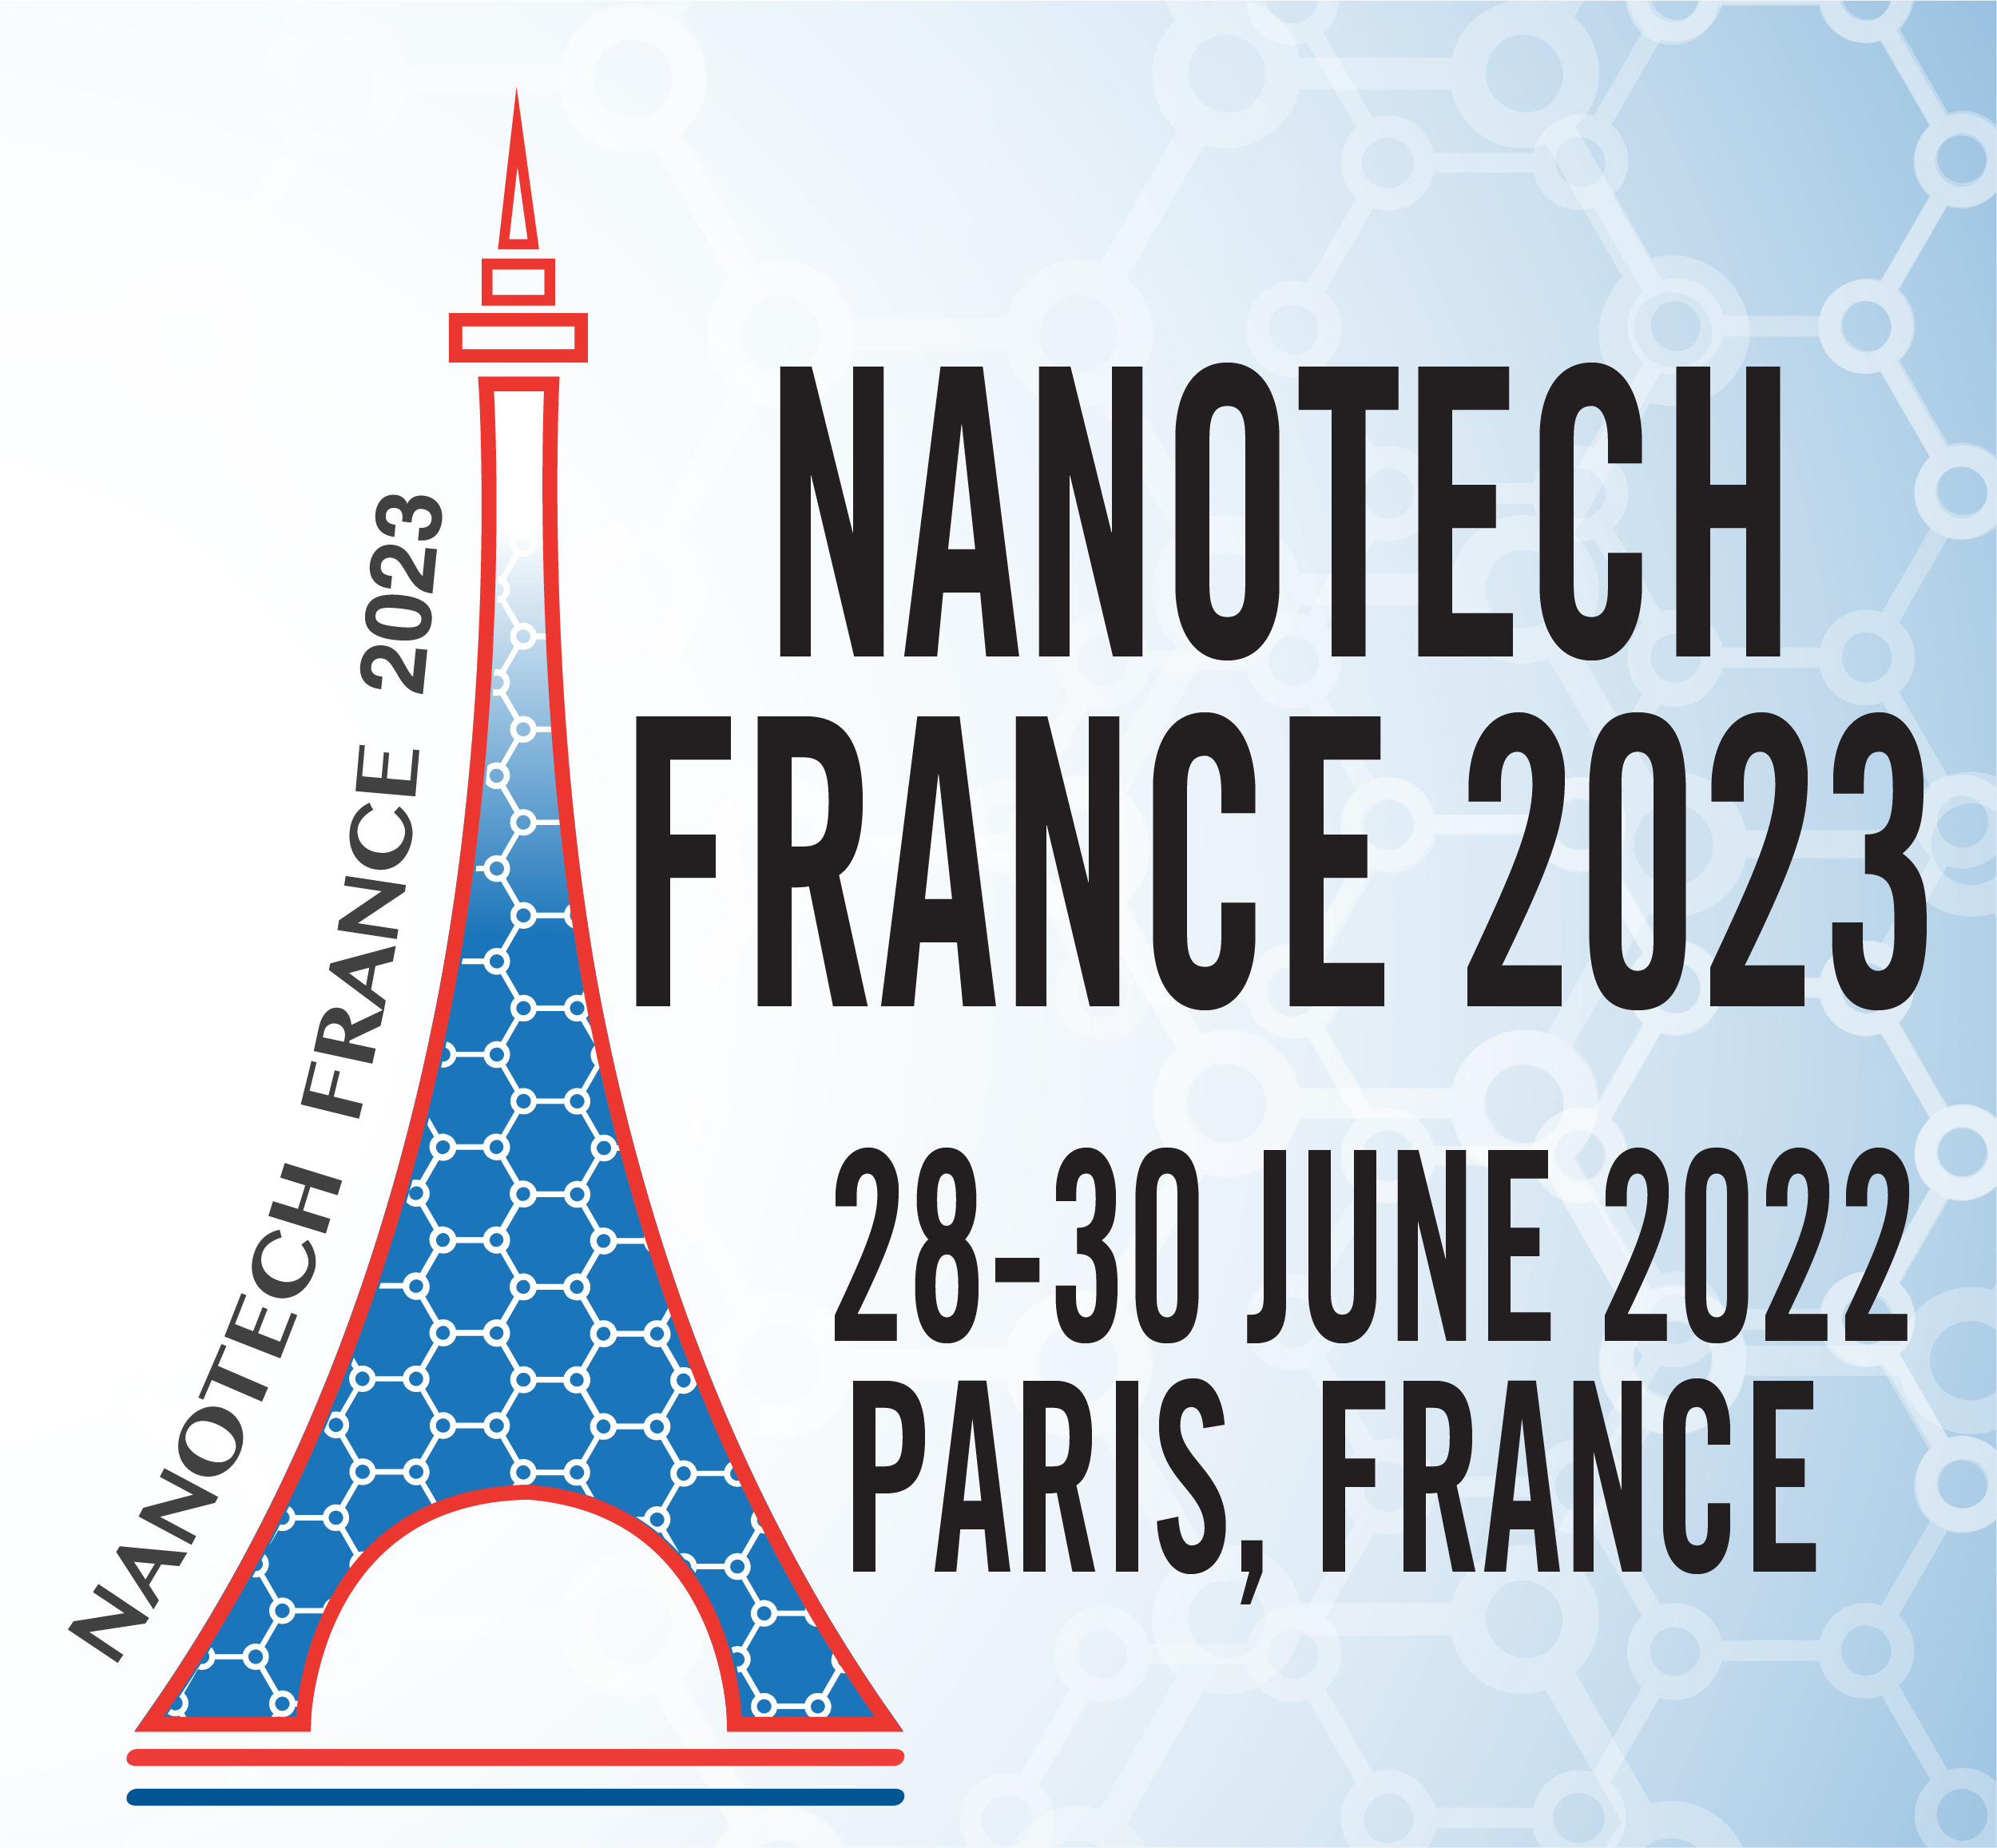 Nanotech France 2023 Conference and Exhibition - Paris, France, 28 - 30 June, 2023